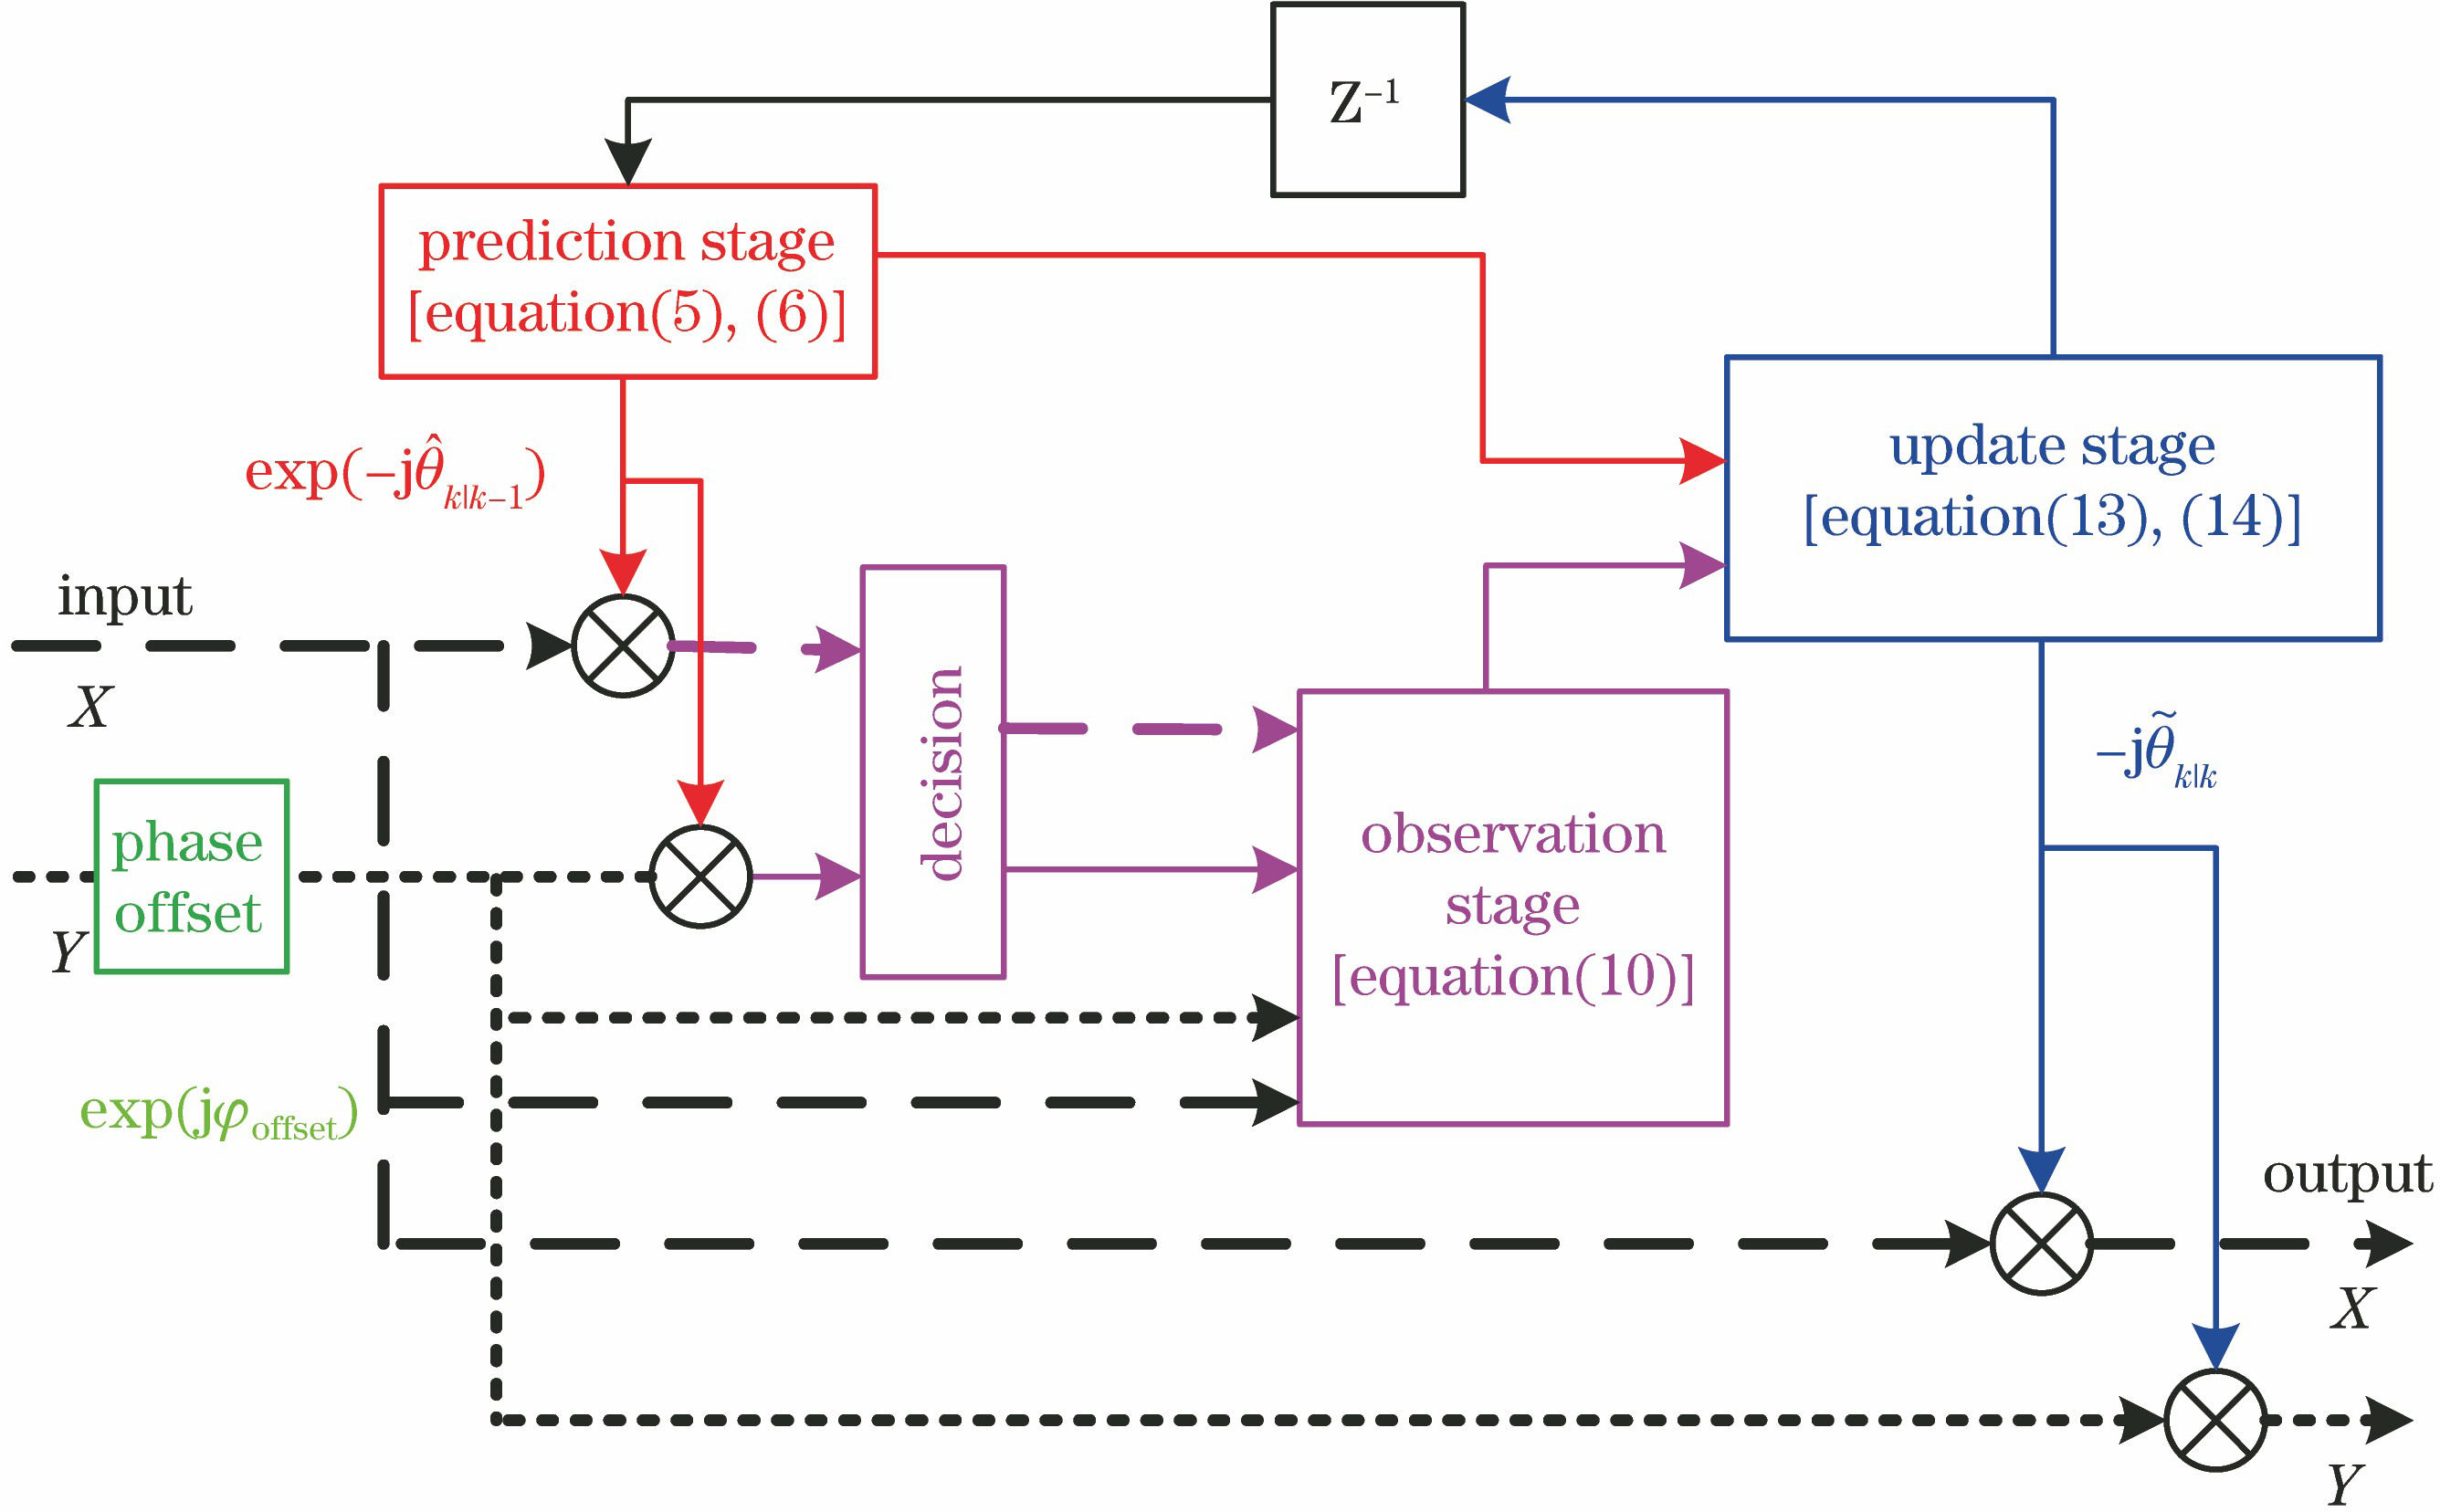 Phase recovery block diagram of dual-polarization extended Kalman filter